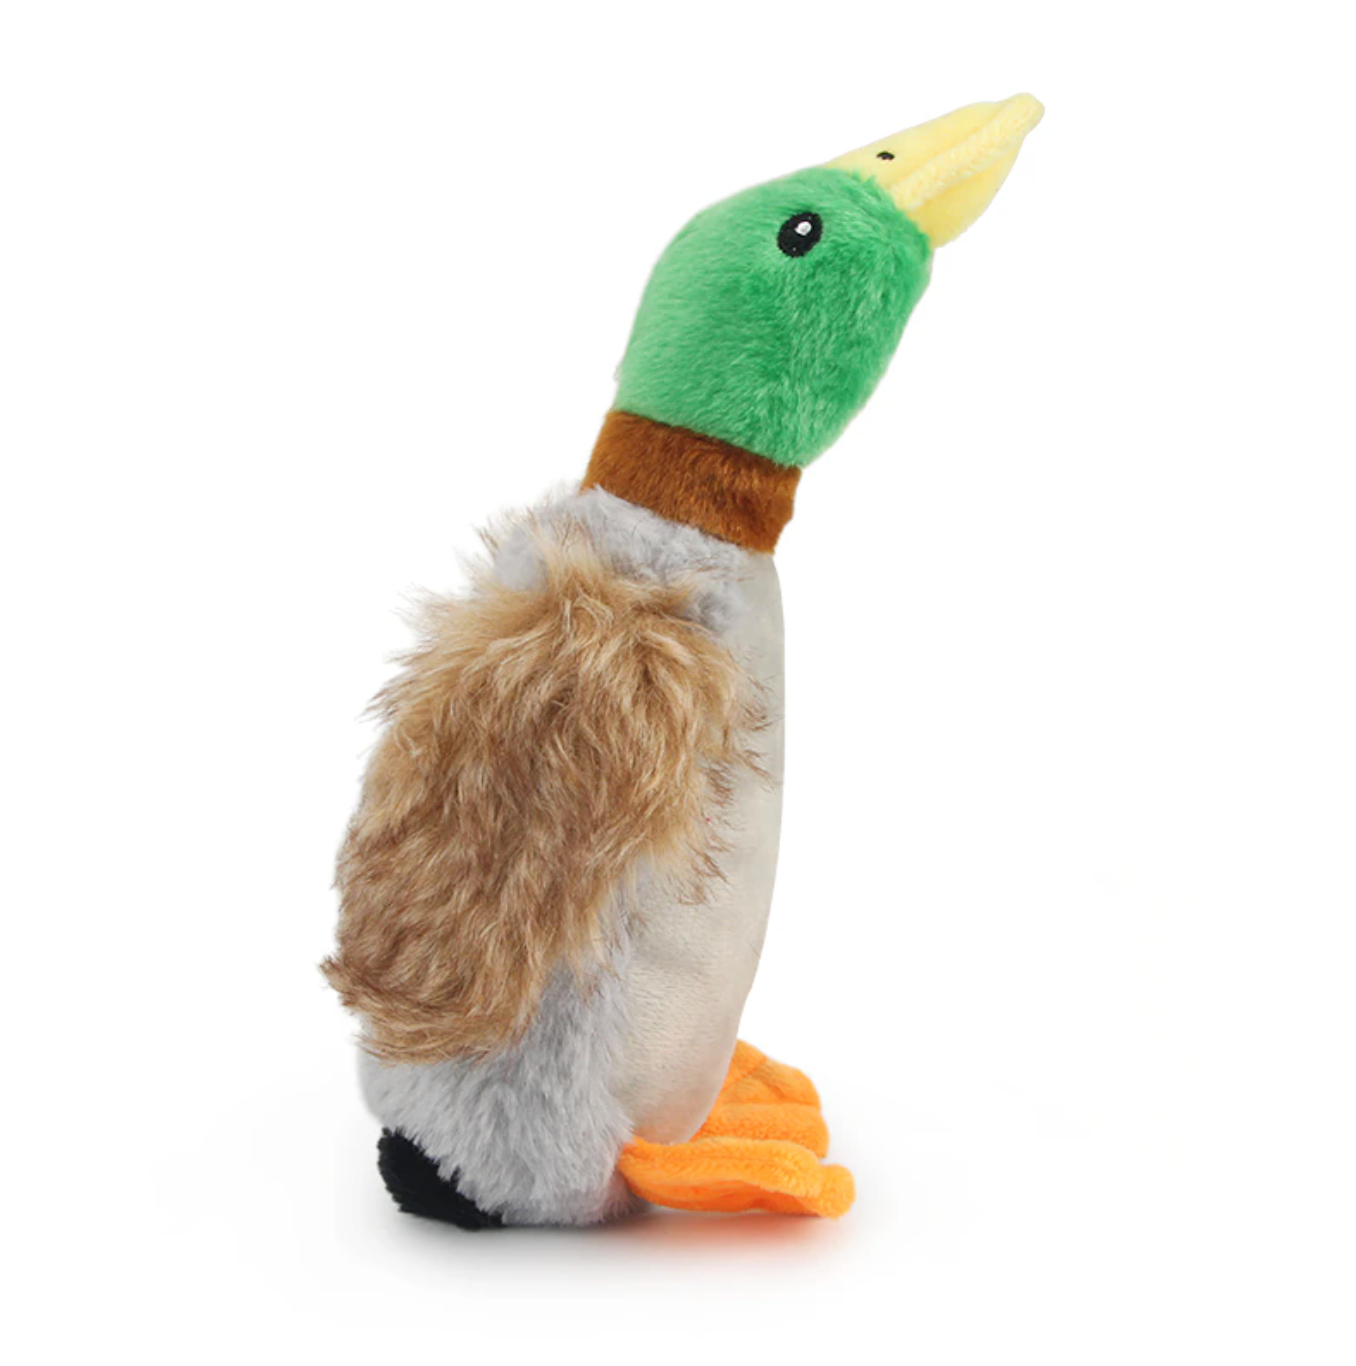 WOOFWAYZ'S Squeaky Duck